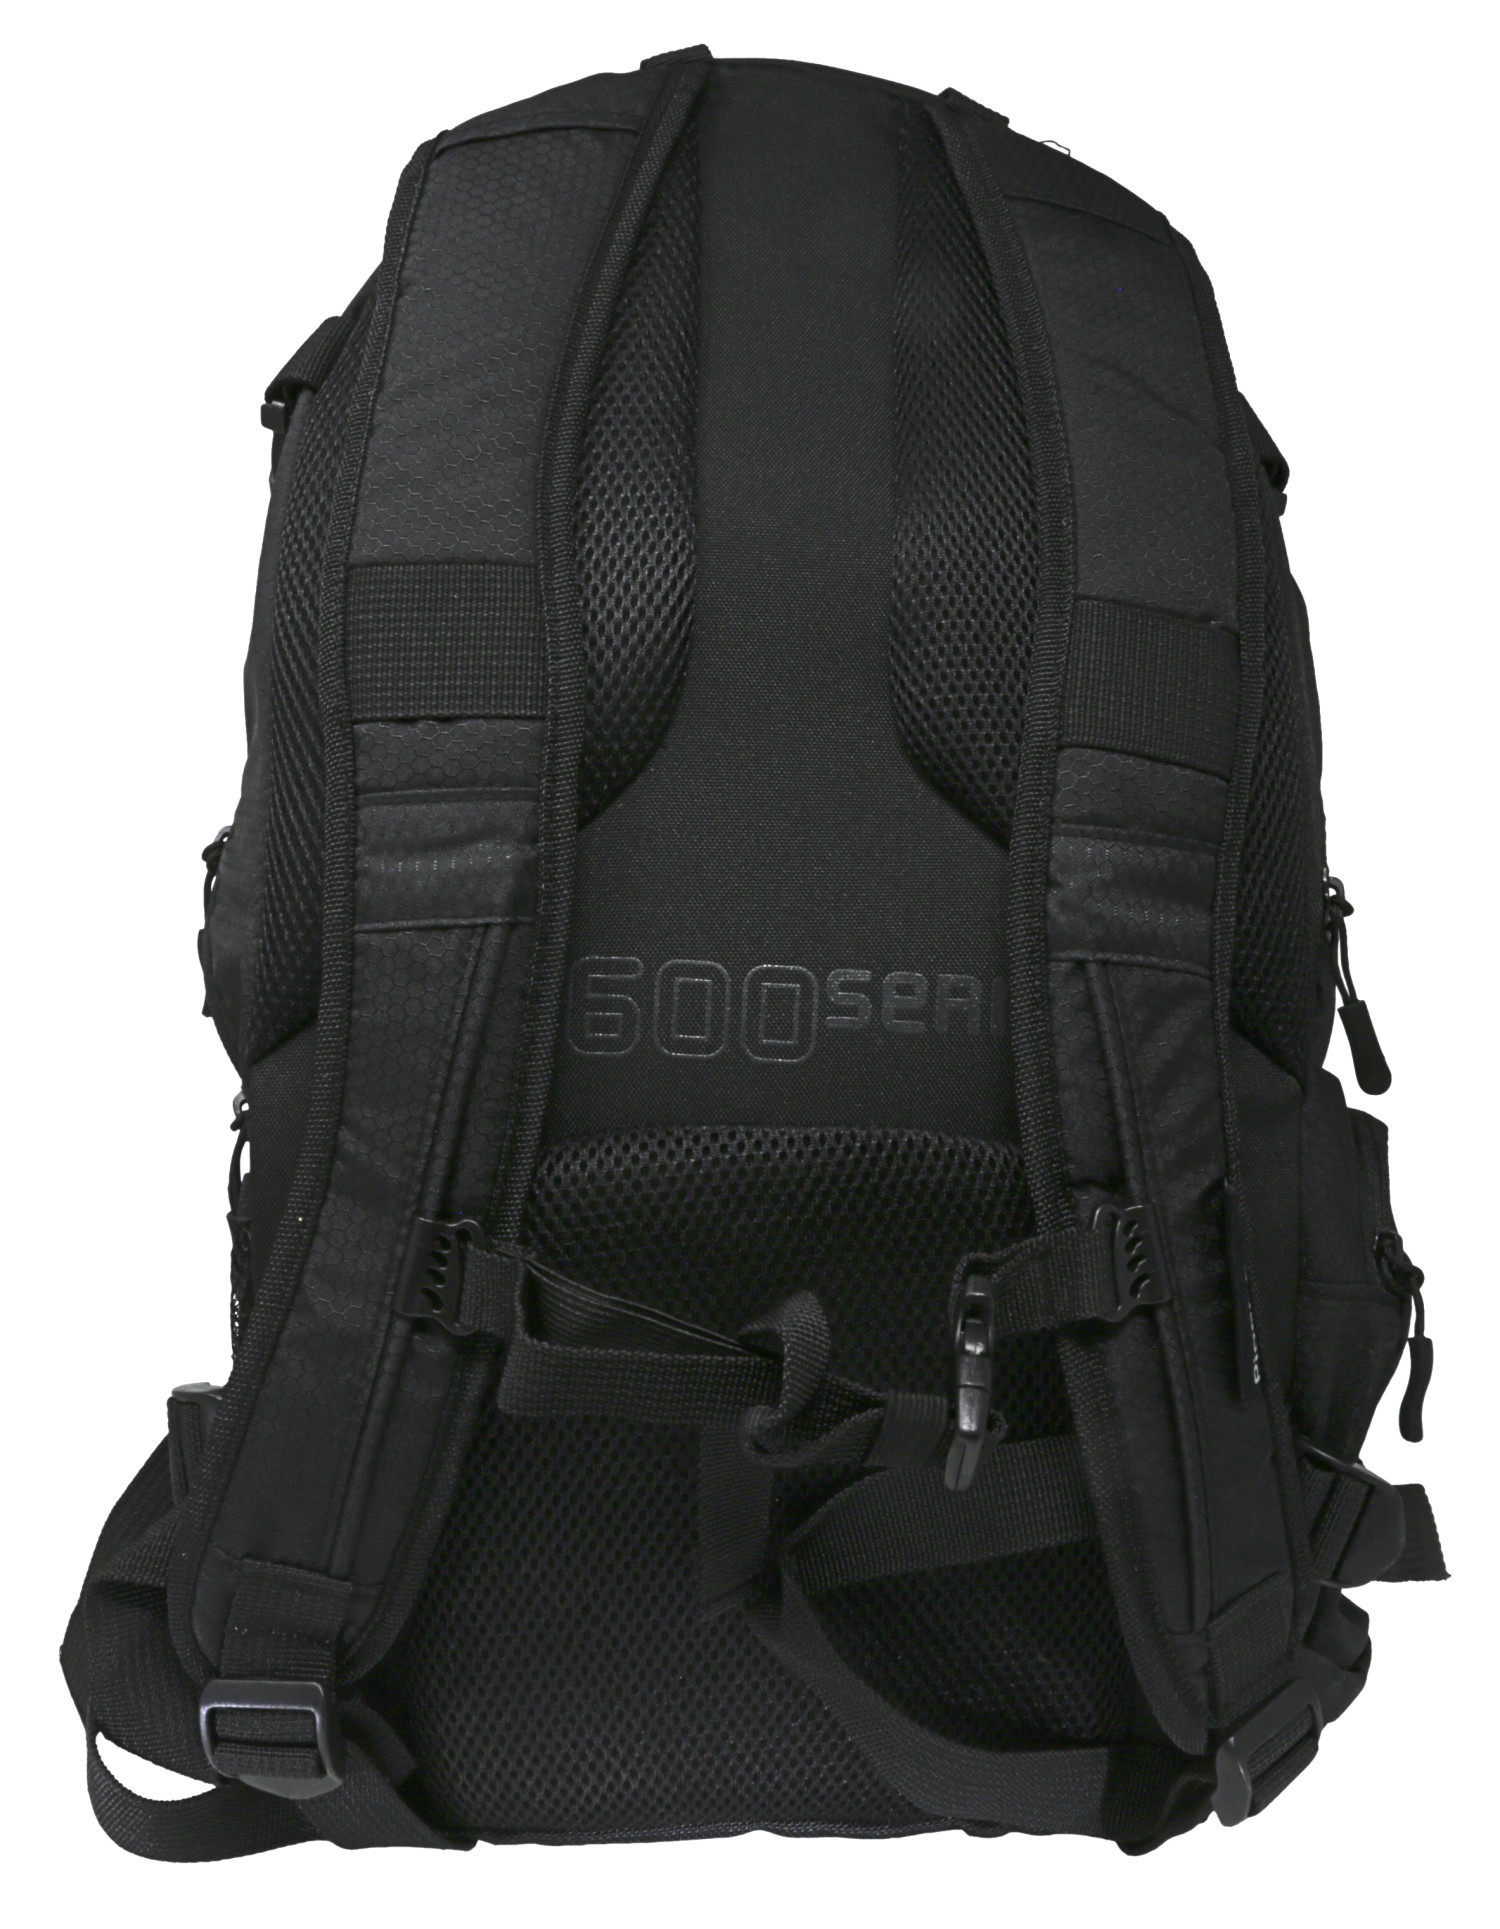 Sandpiper Ridgeline Backpack, Black/Light Grey - image 2 of 2